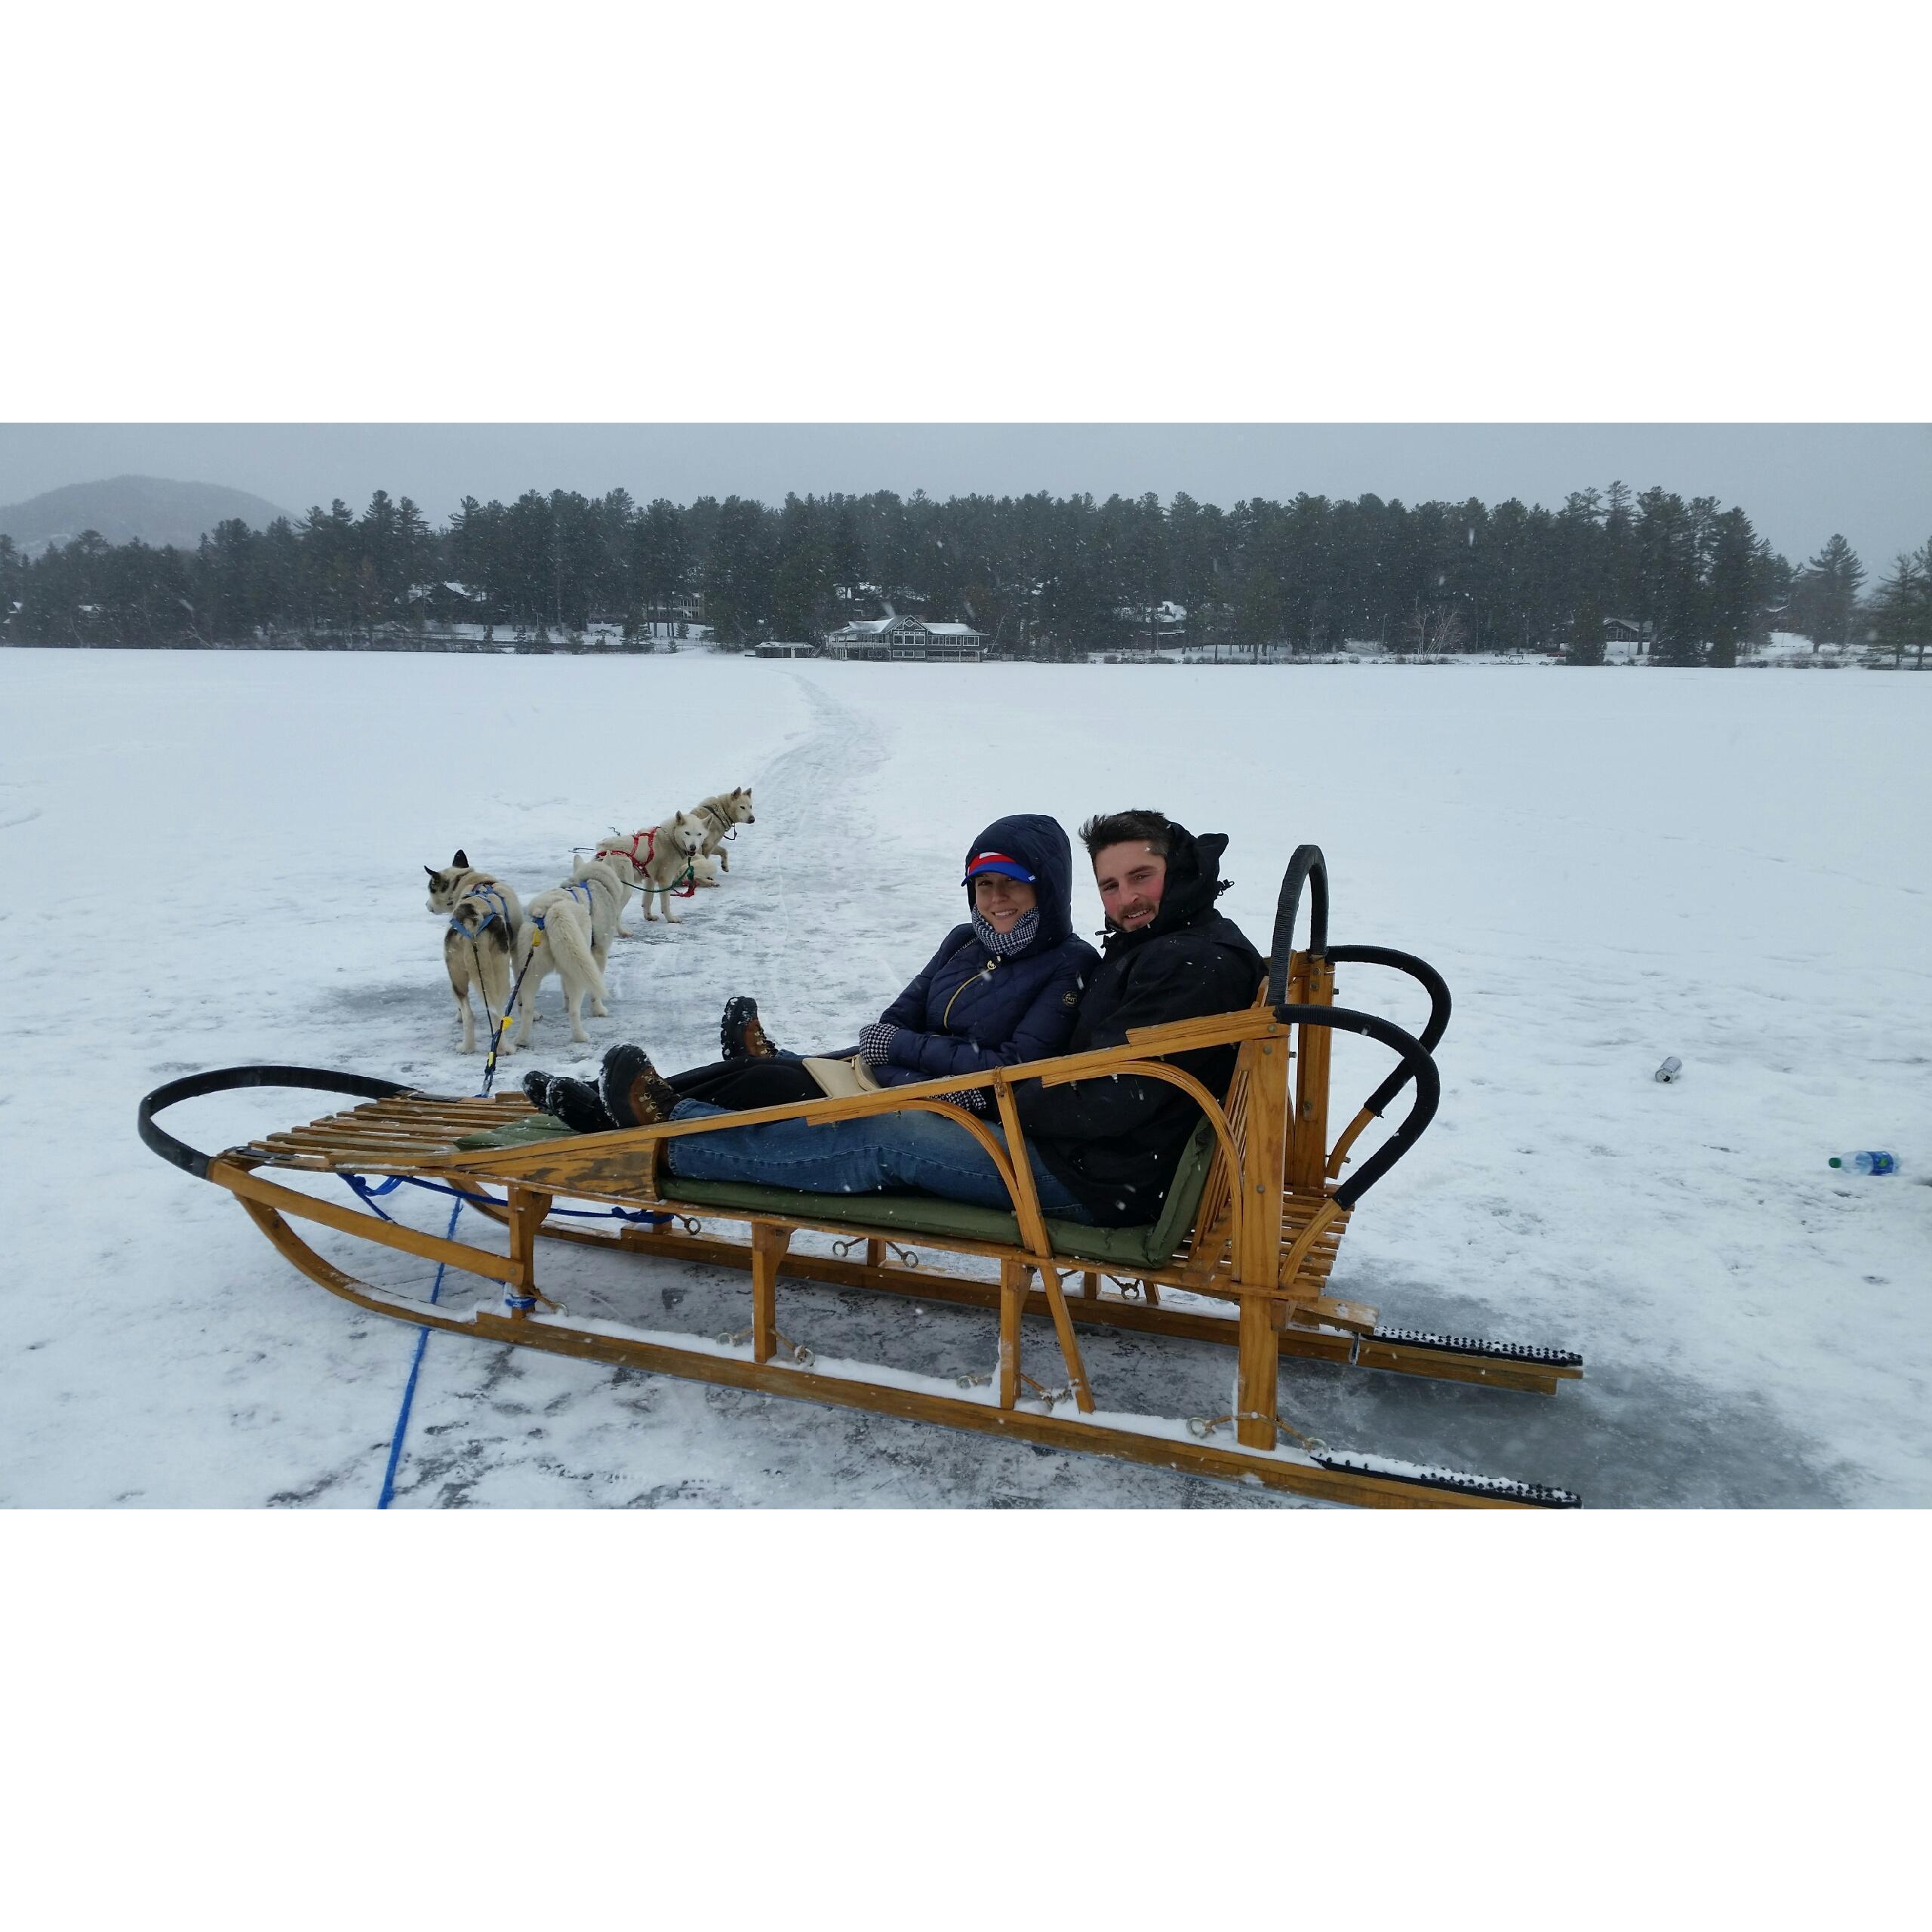 Dog sledding in Lake Placid!